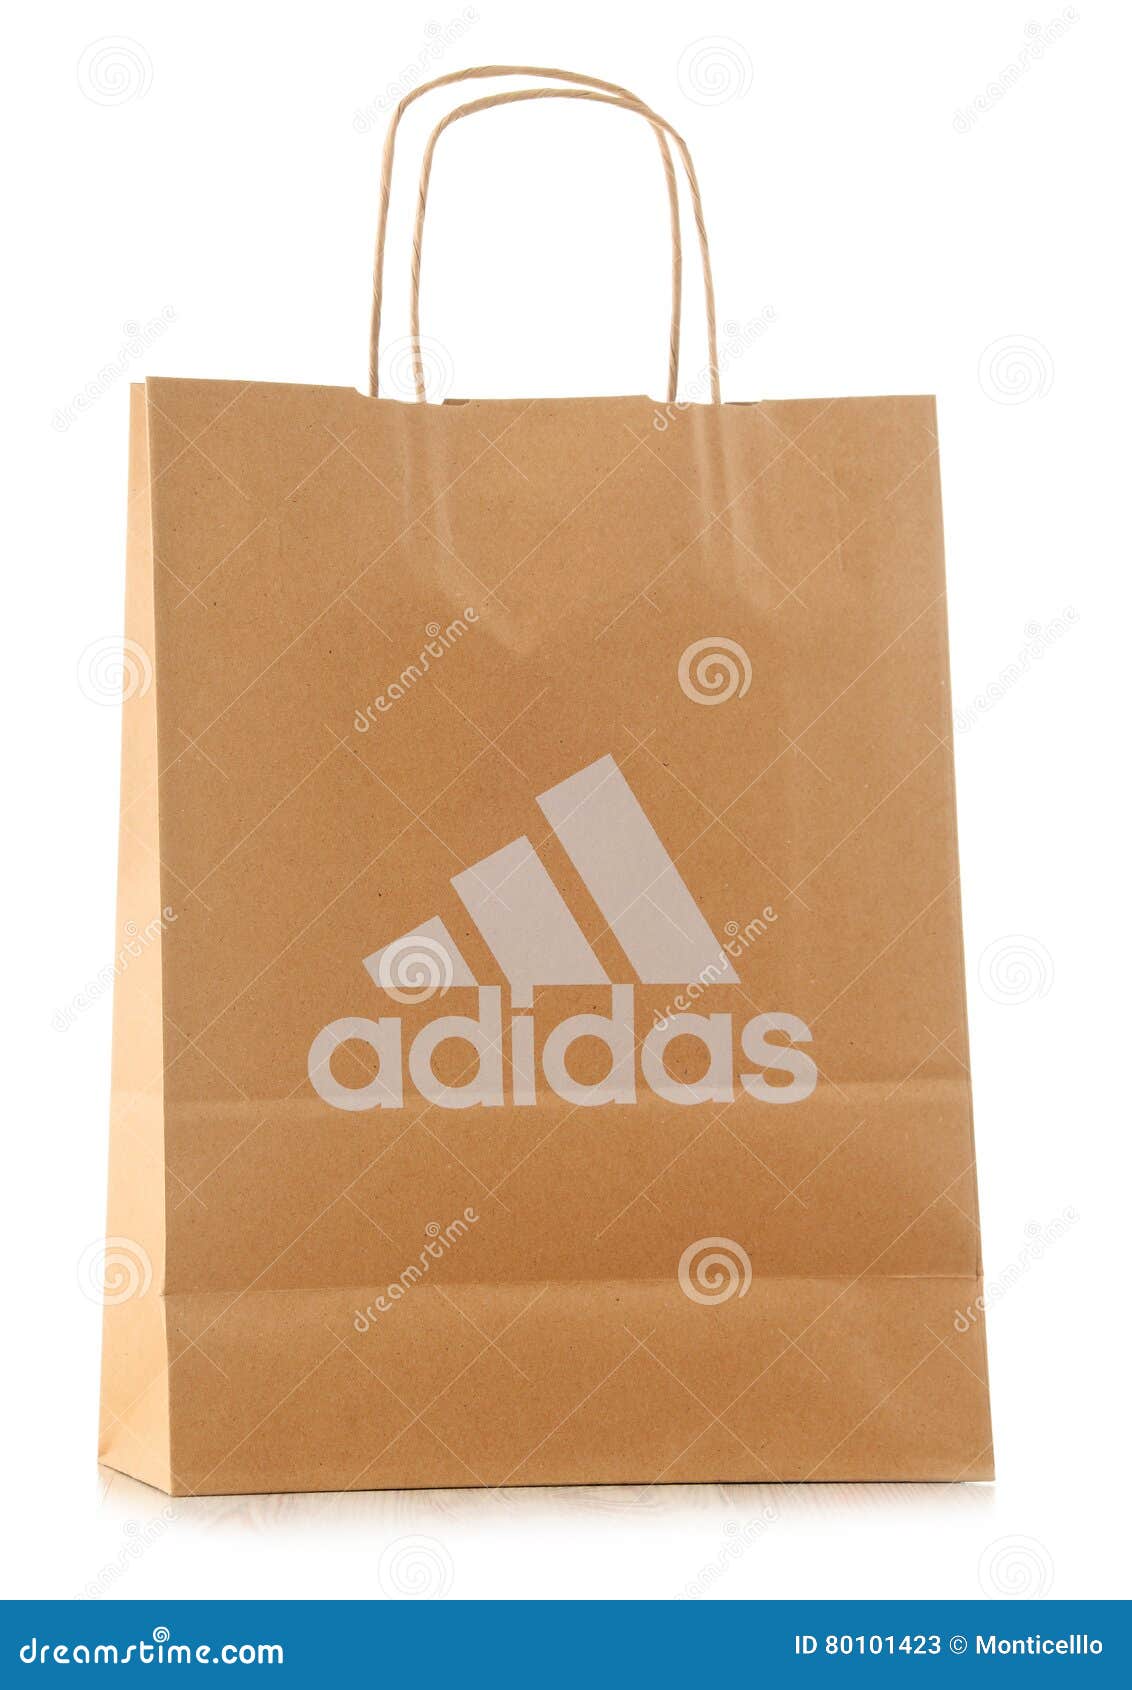 adidas shopping bags